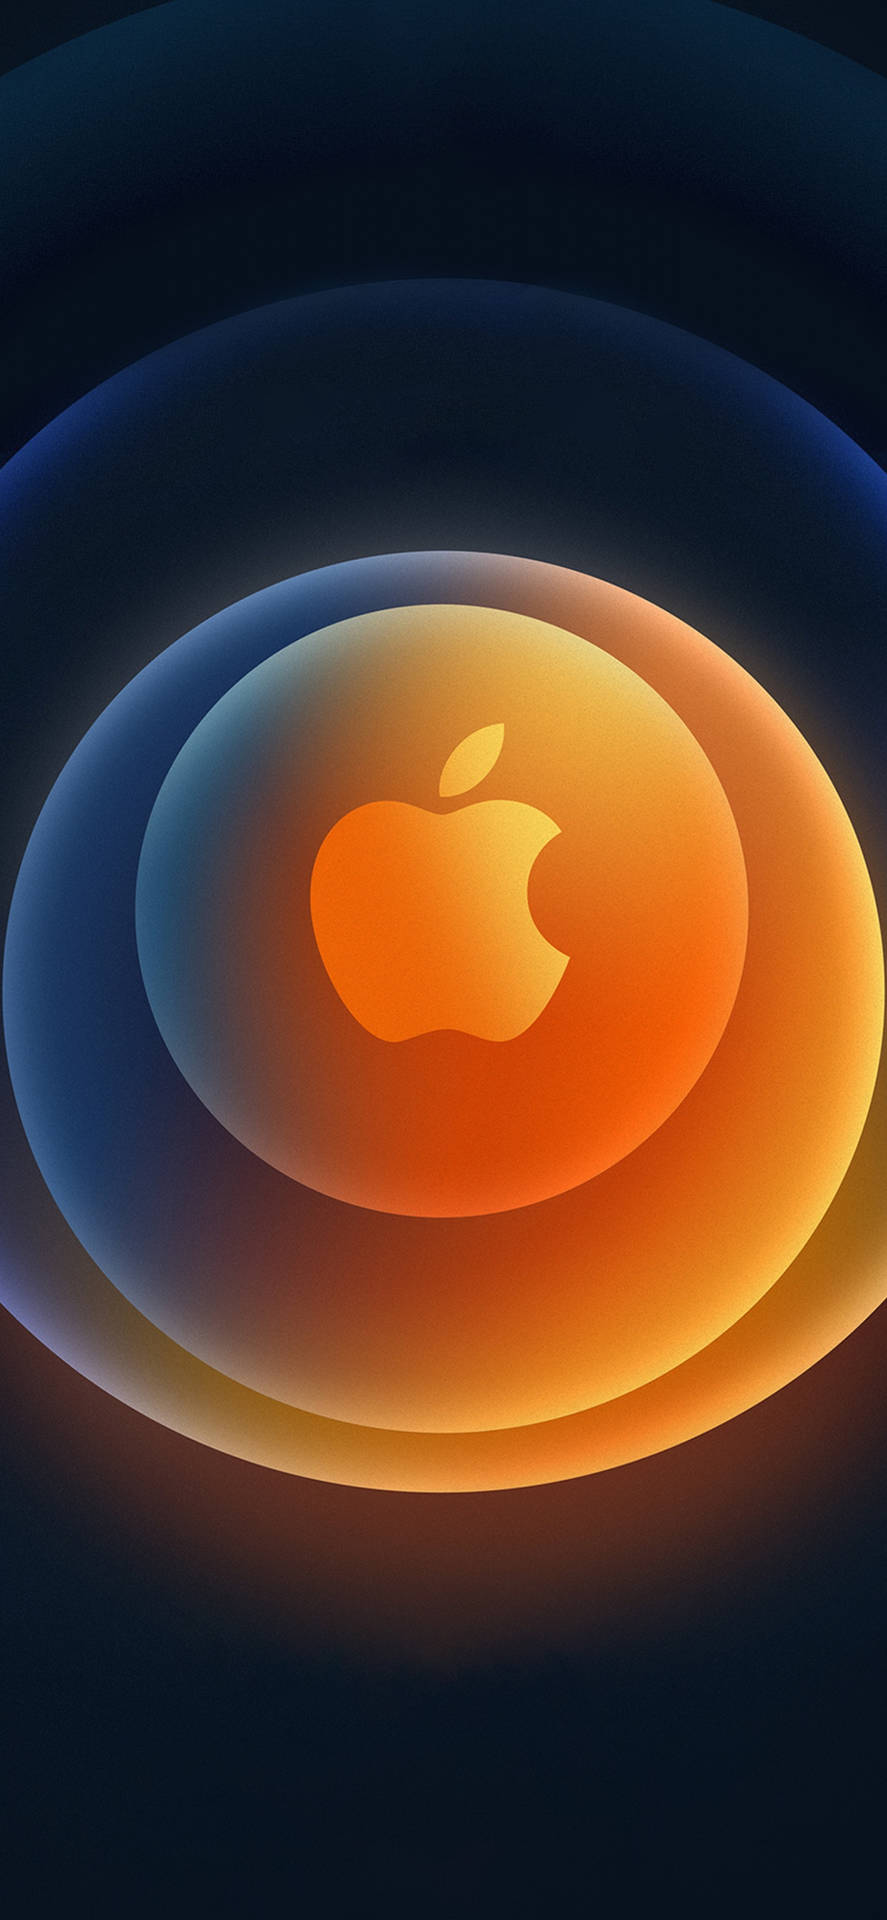 3d Apple Iphone Logo Concentric Circles